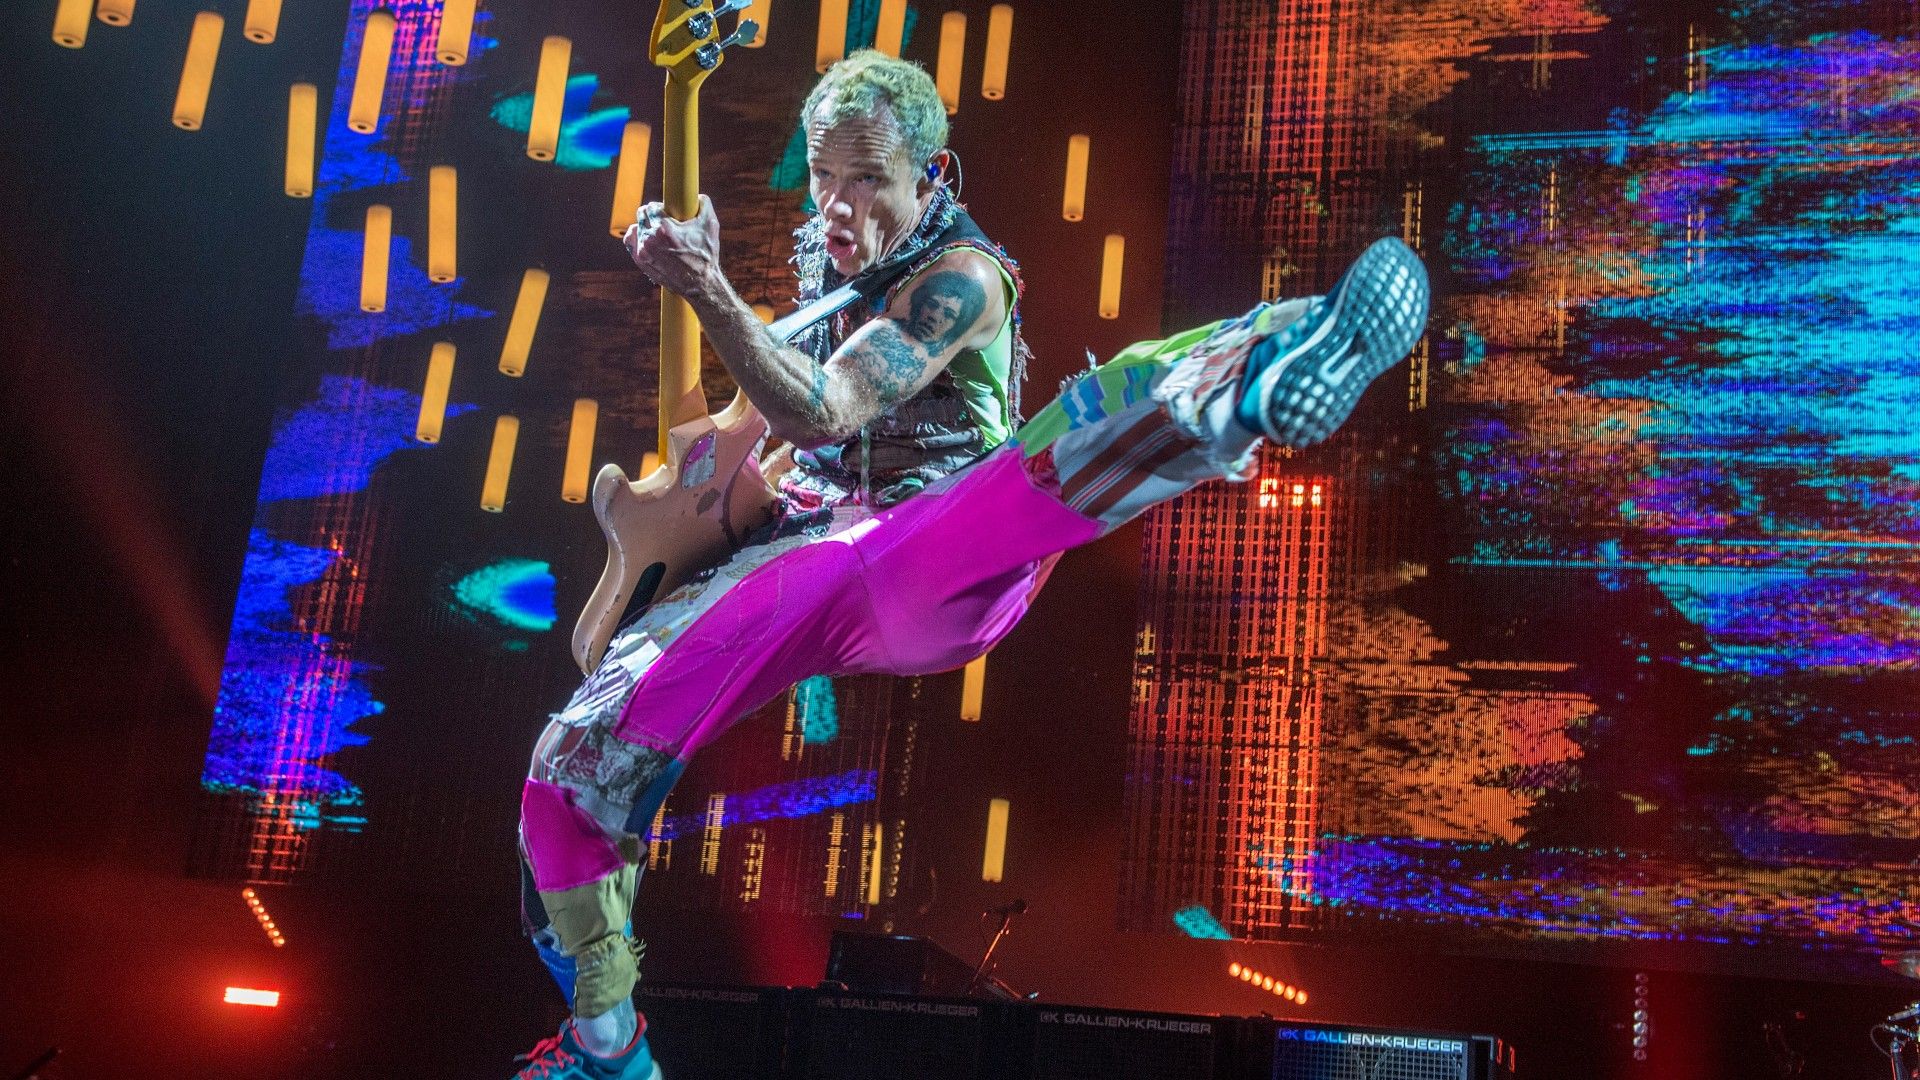 El bajista de Red Hot Chili Peppers Michael Flea Balzary, durante el concierto que la banda ofreció en el Palau Sant Jordi en octubre de 2016